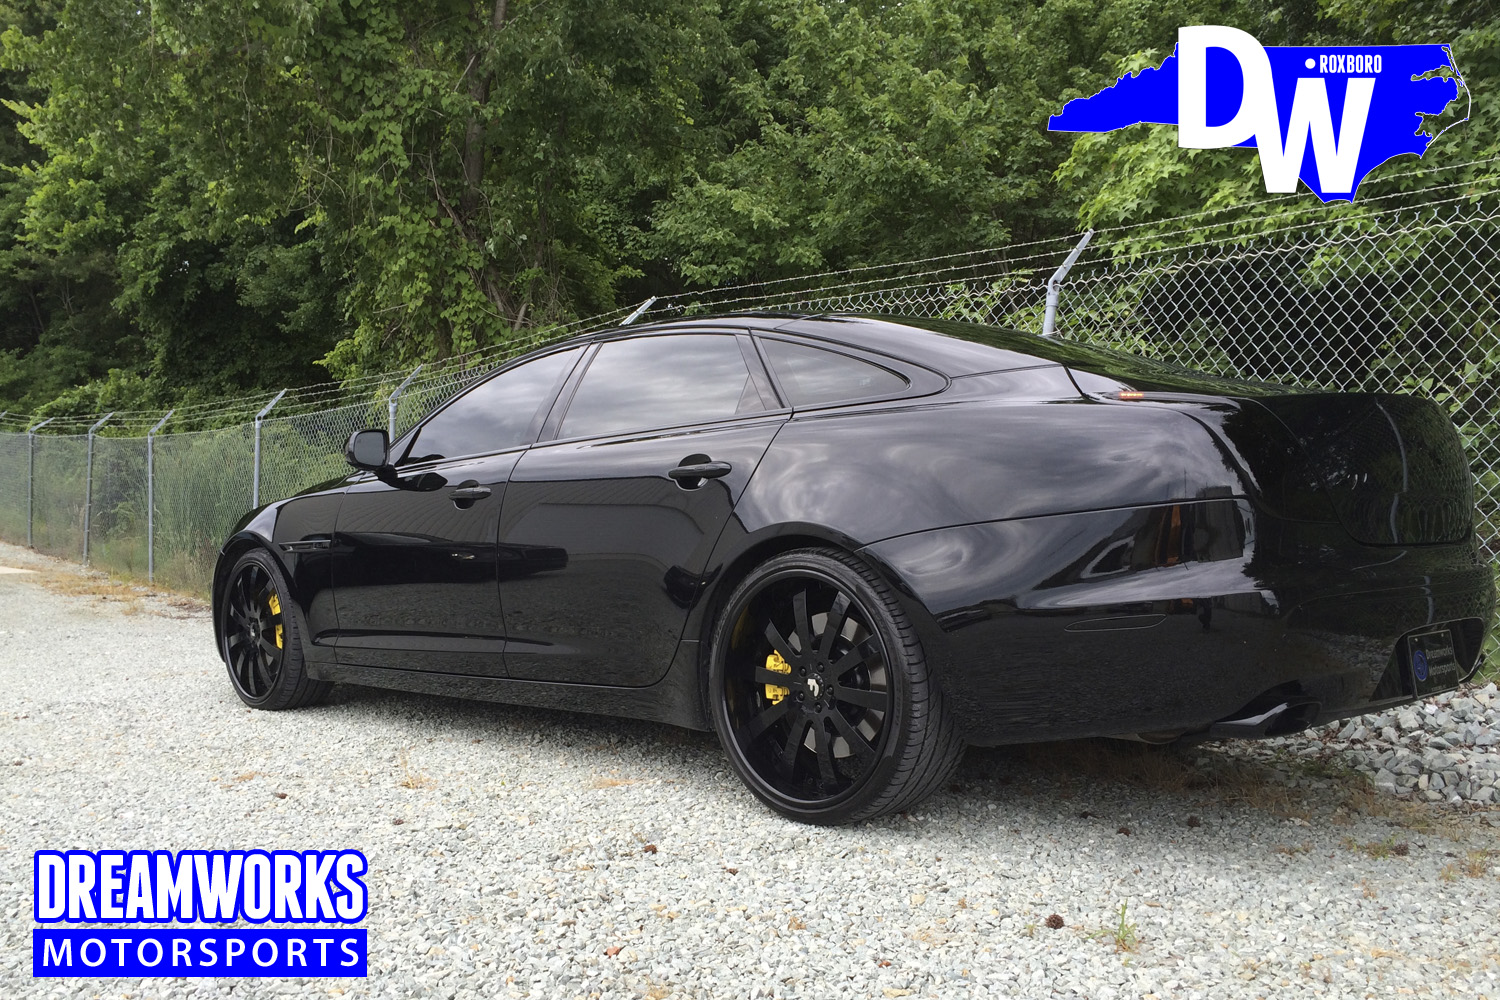 Jaguar_XJL_Spercharged_By_Dreamworks_Motorsports-4.jpg